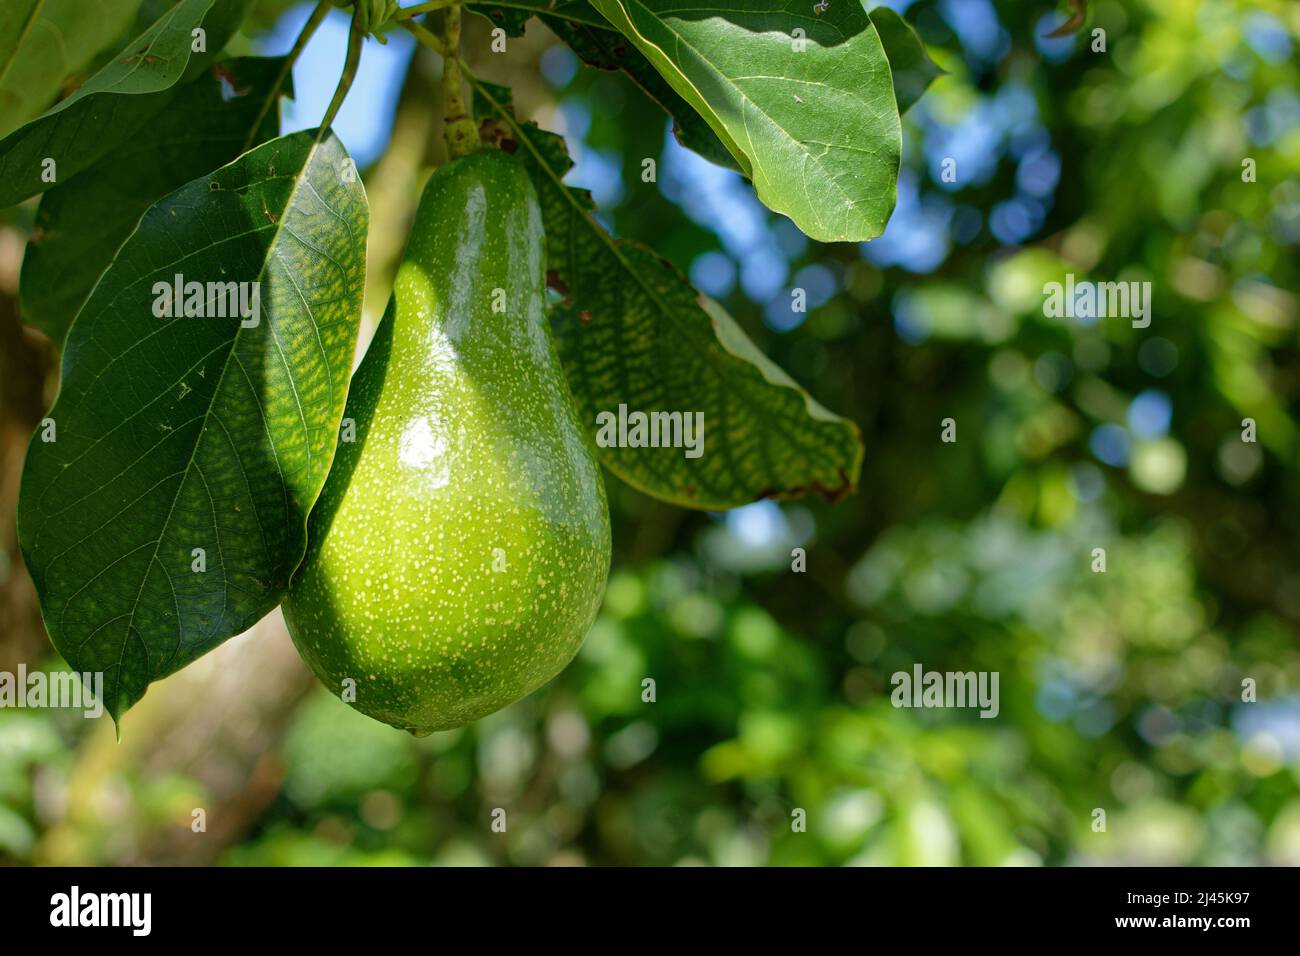 French Polynesia, Tahaa: close-up shot of an avocado in a tree Stock Photo